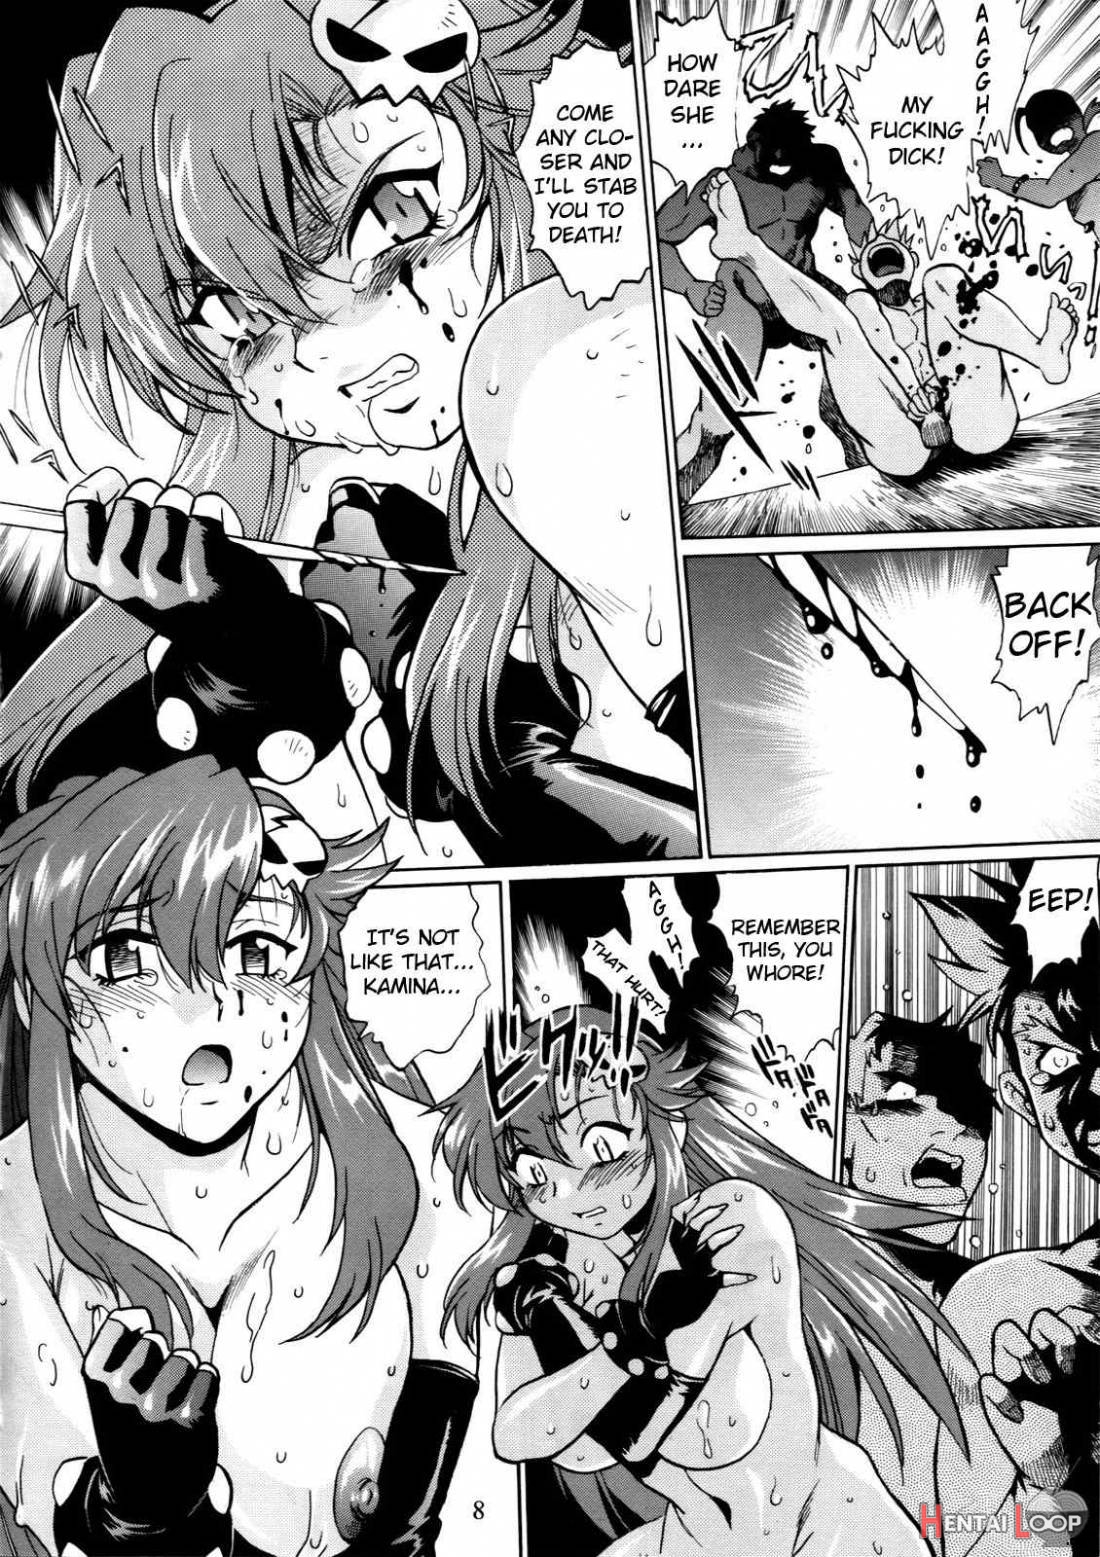 Yoko Ni Manpuku!! Vol. 2 page 5